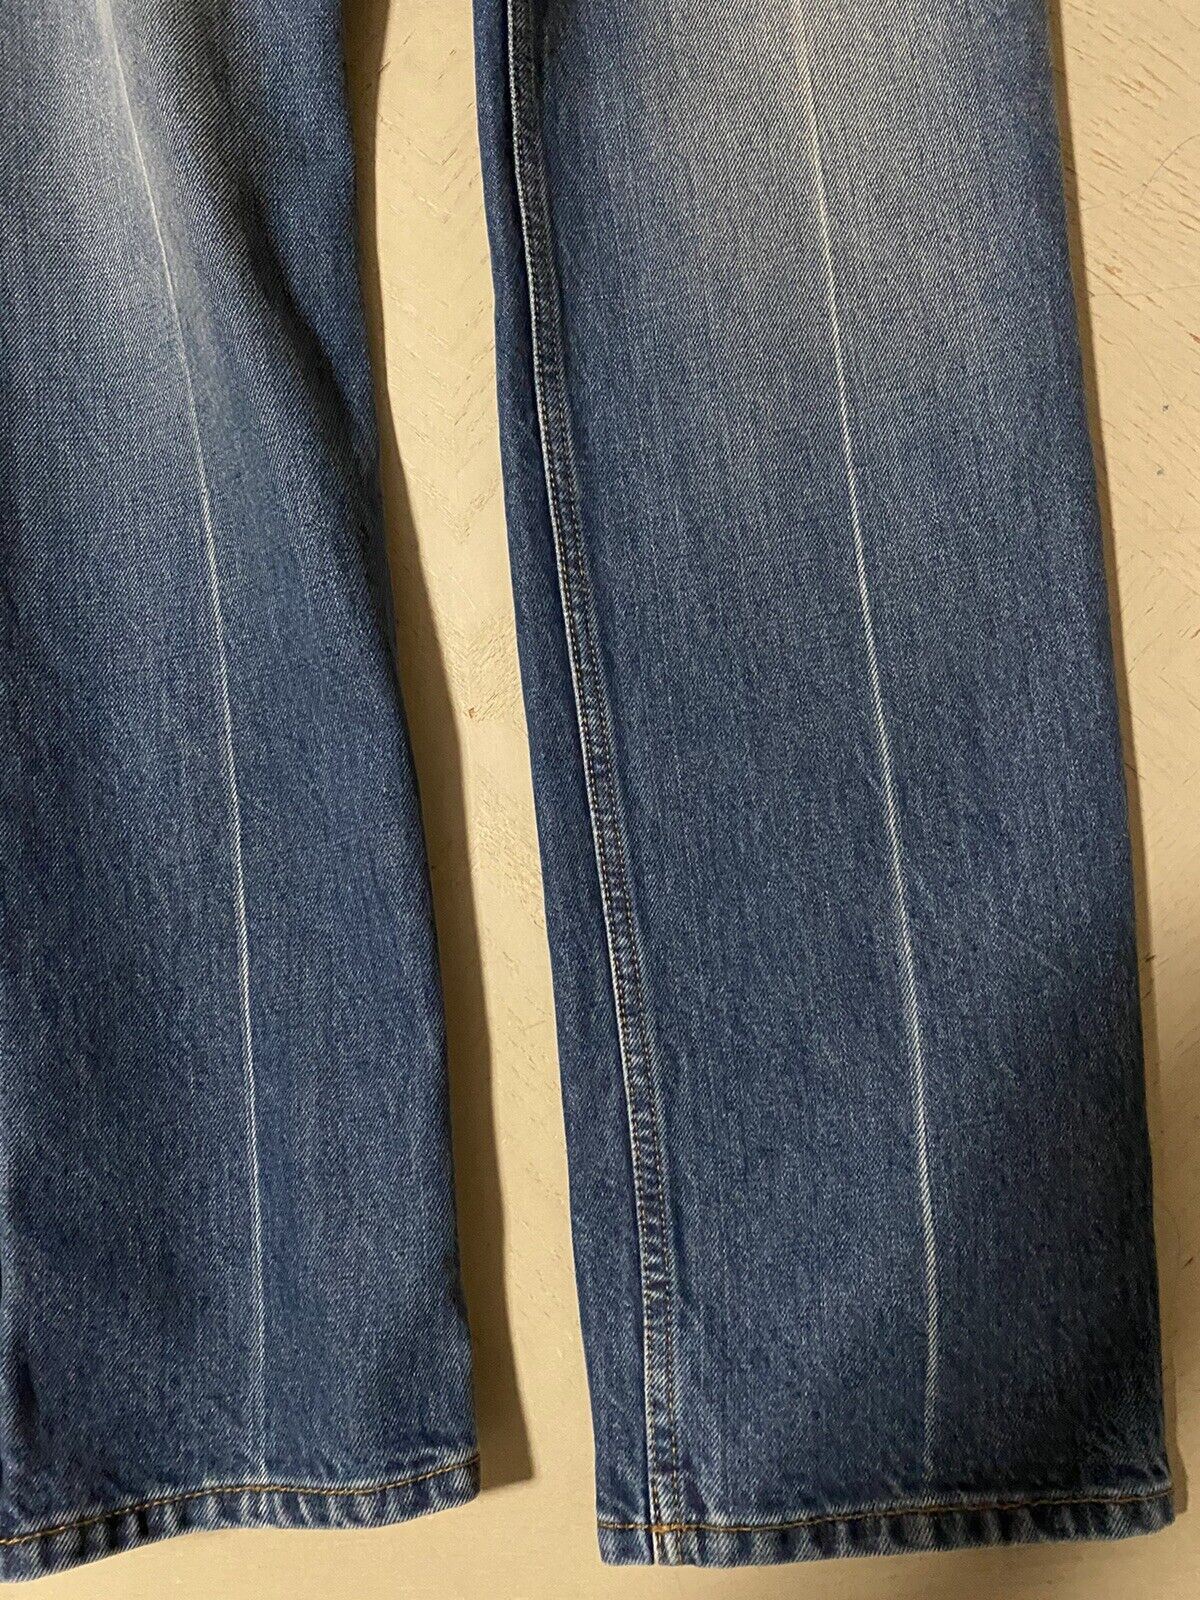 NWT $1300 Gucci Men’s Jeans Denim Pants Blue 32 US Italy